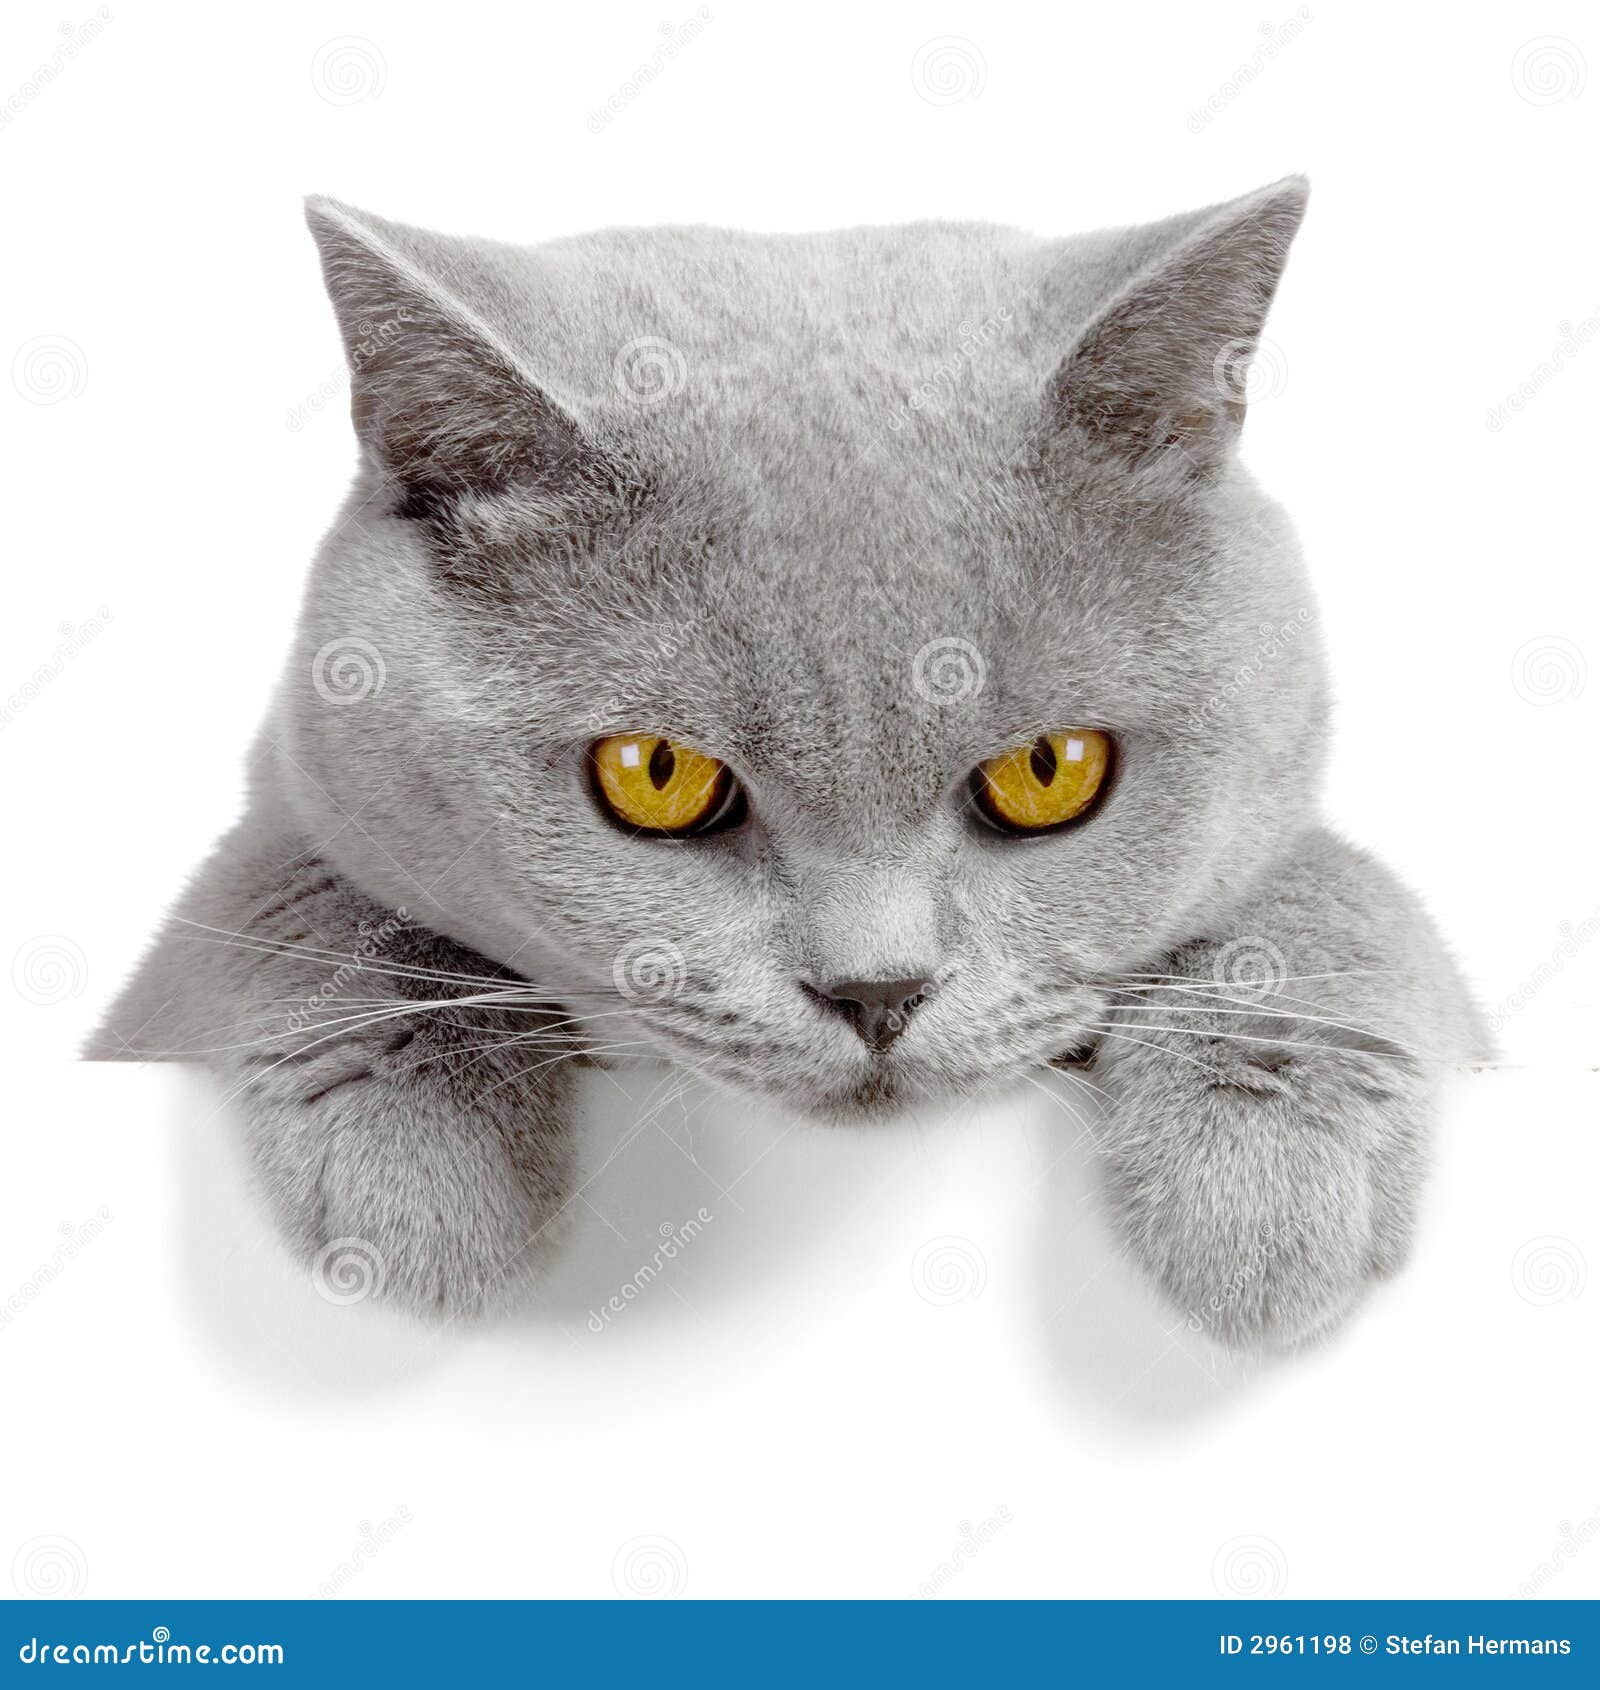 angry-cat-banner-2961198.jpg